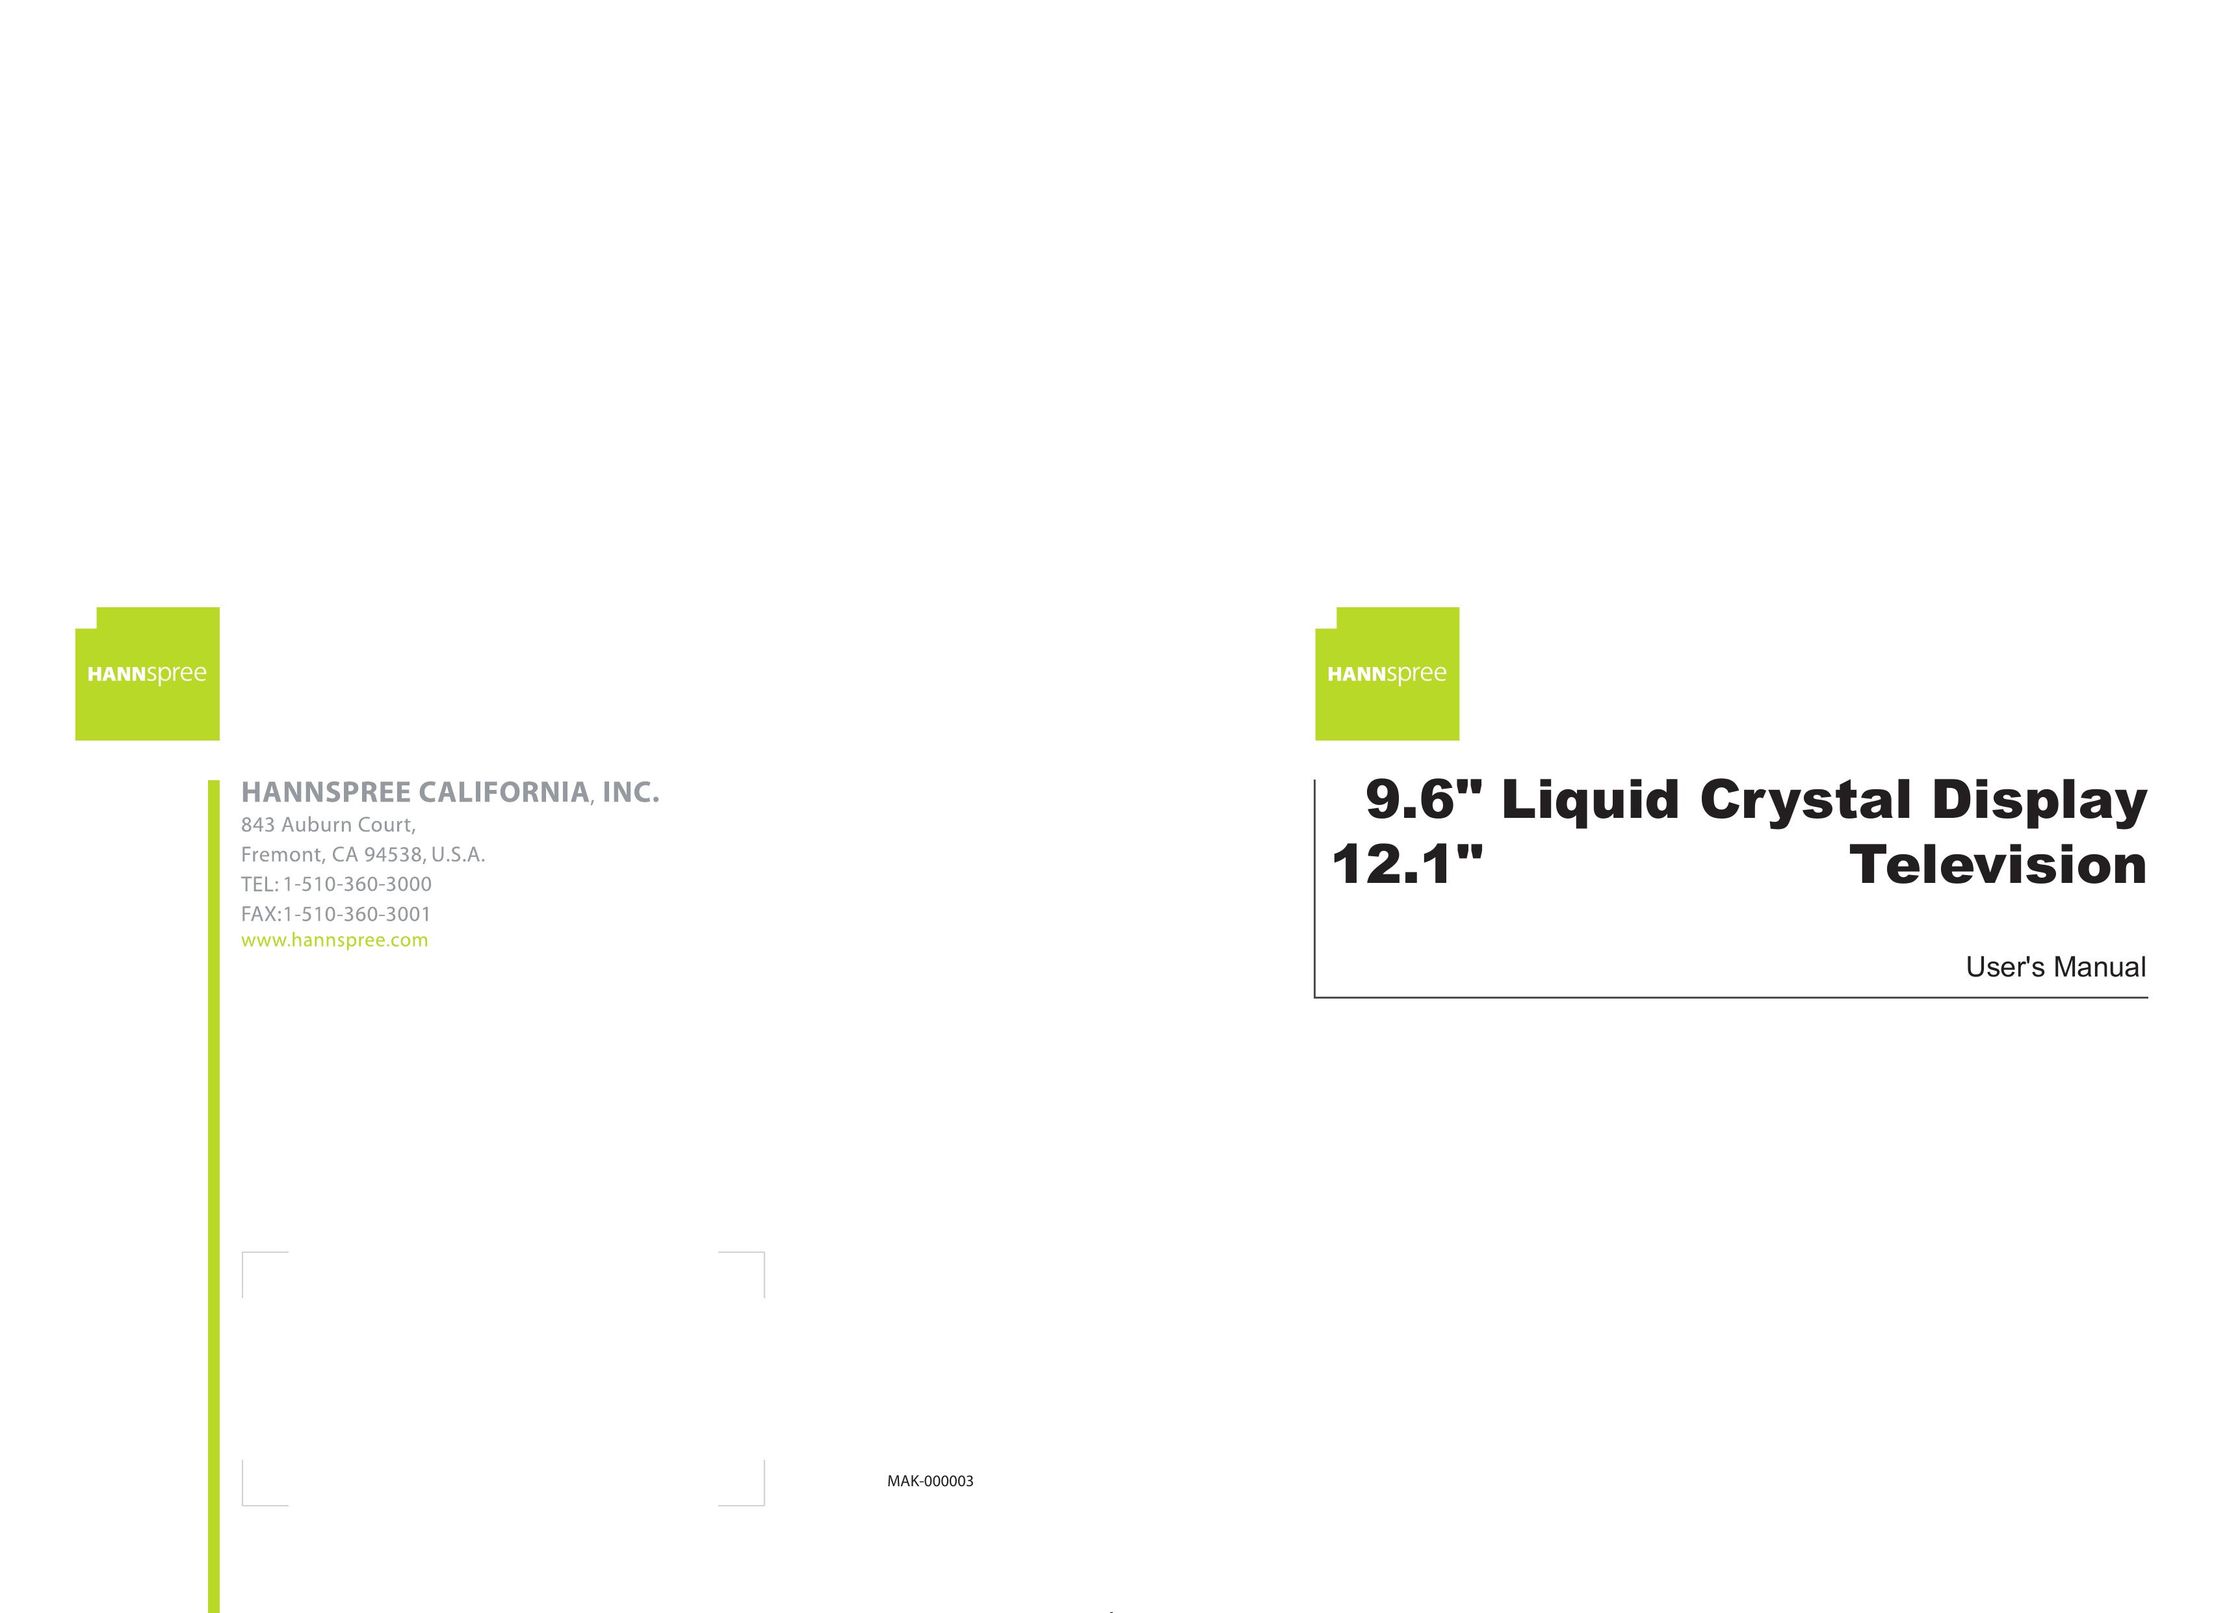 HANNspree 9.6" Liquid Crystal Display 12.1" Television Car Video System User Manual